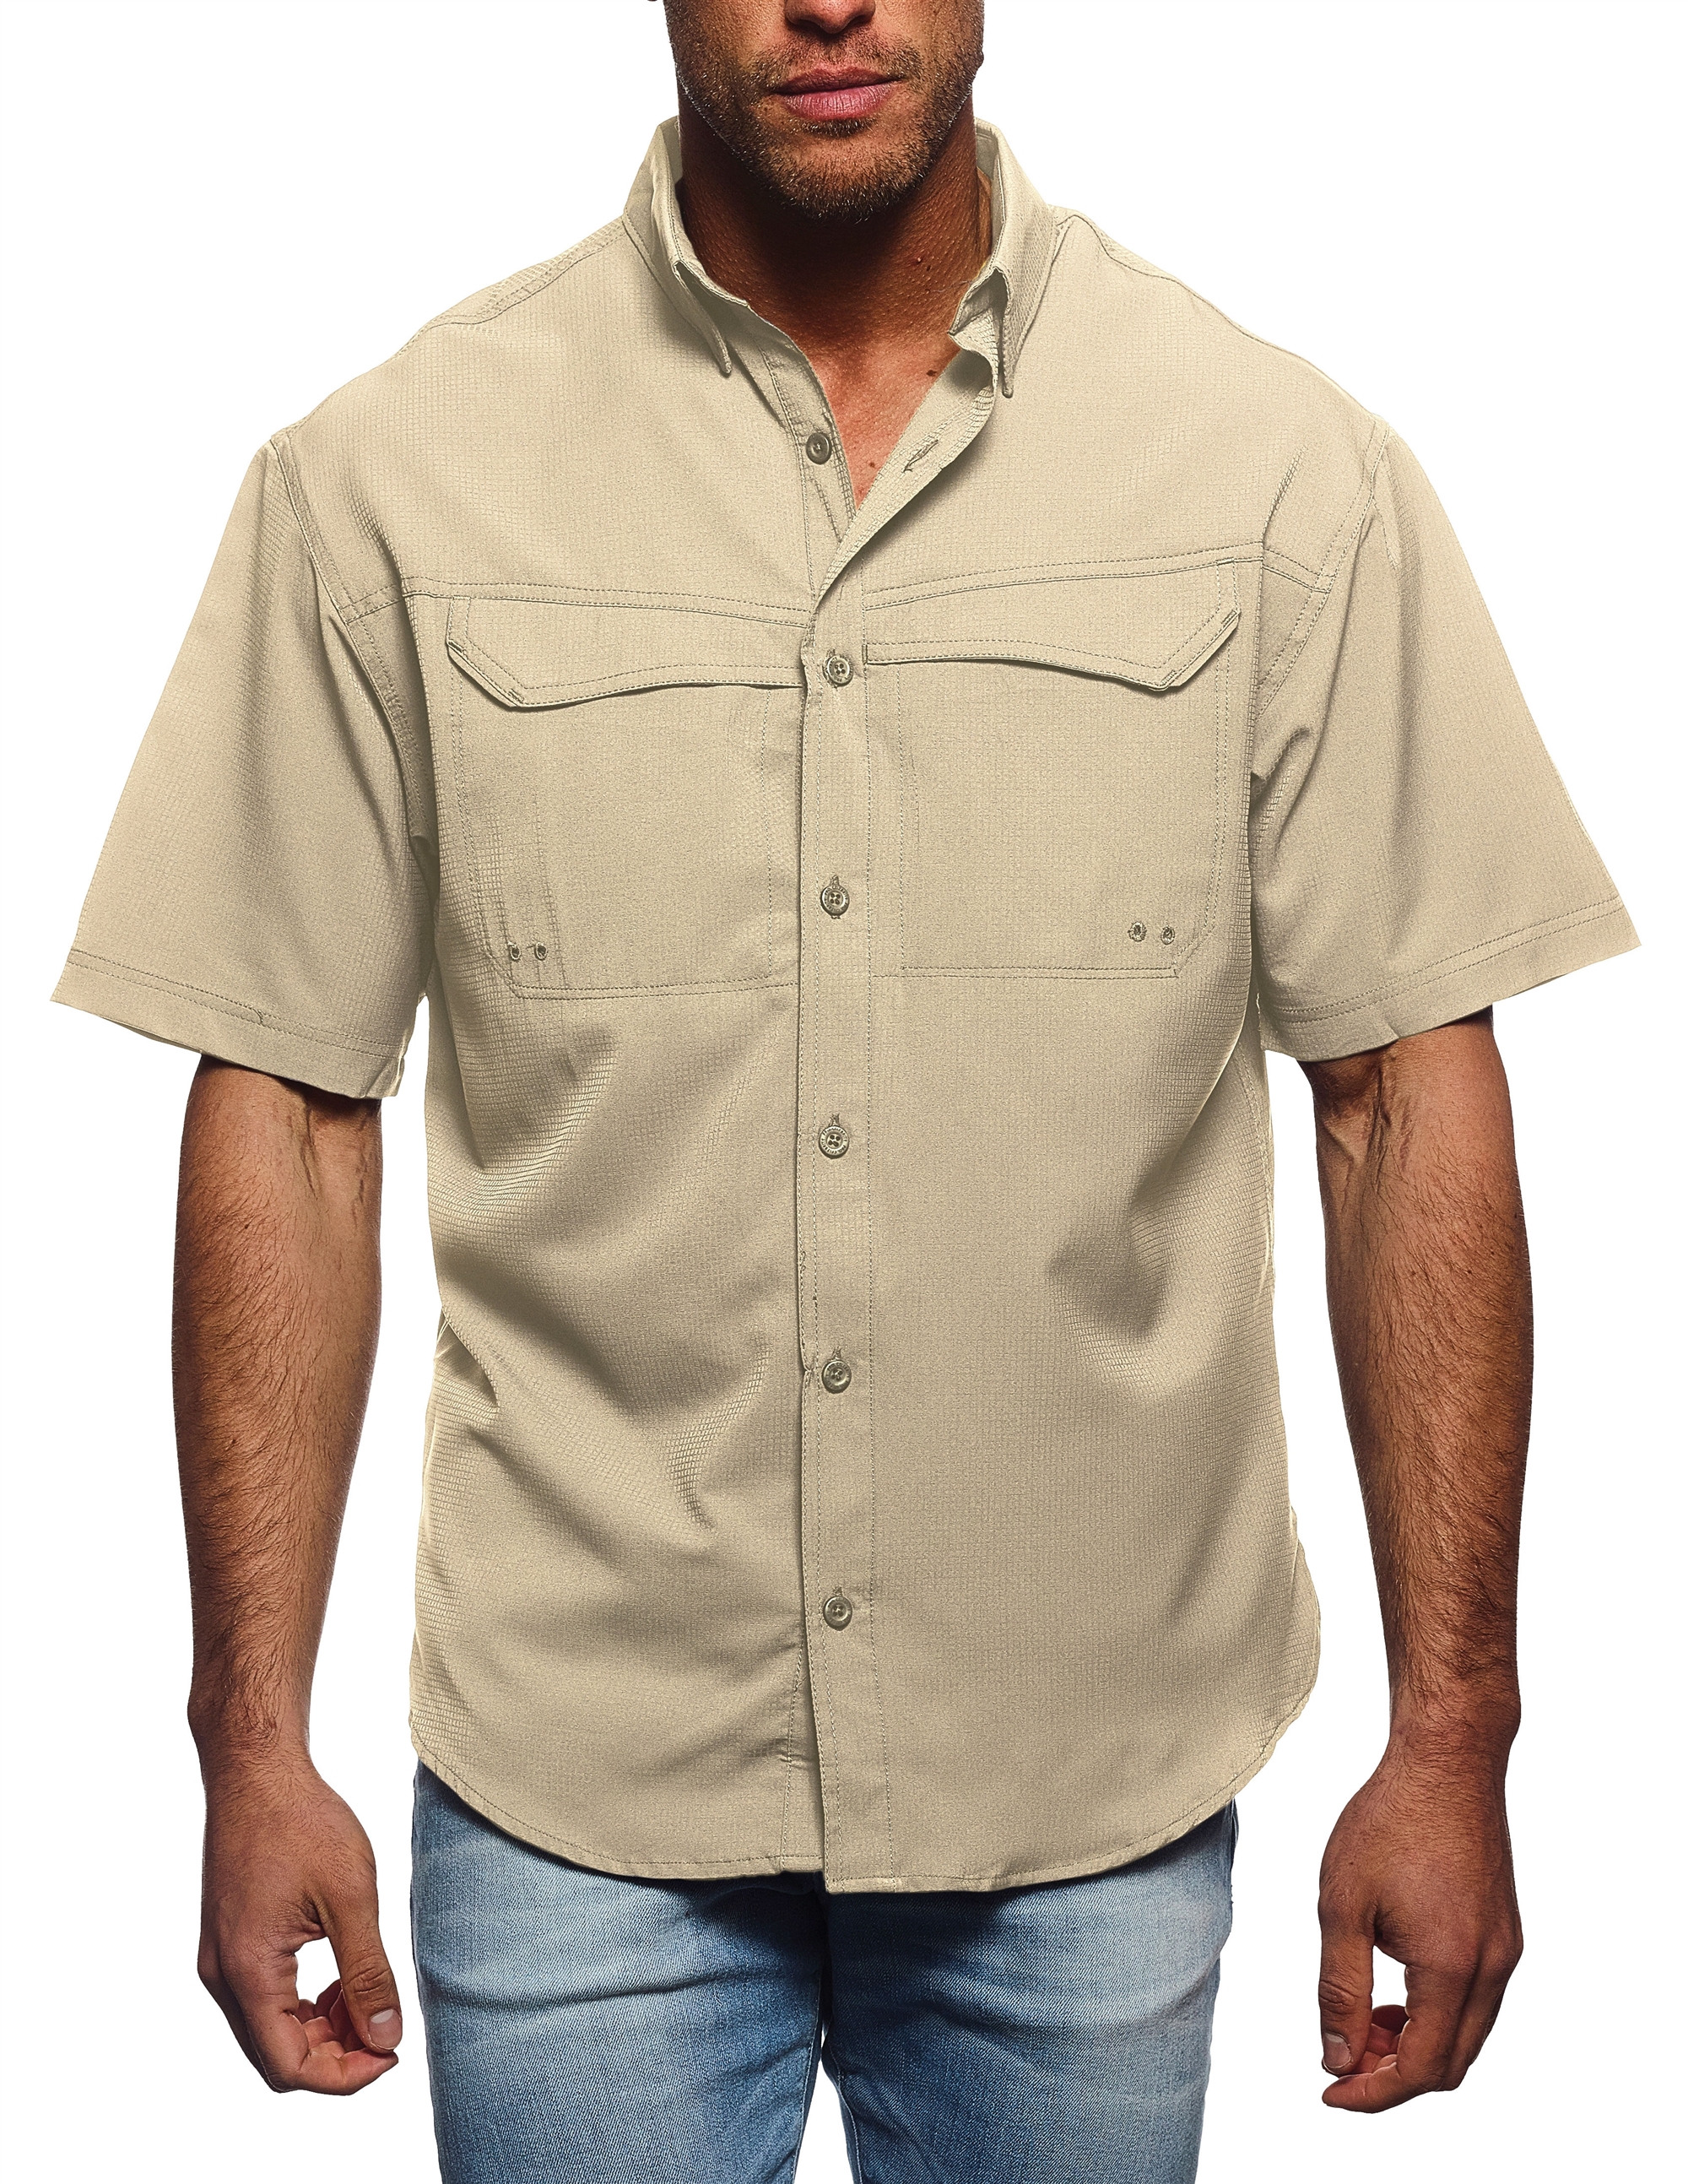 Pro Celebrity Men's Short Sleeve Pro Fishing Shirts FST889